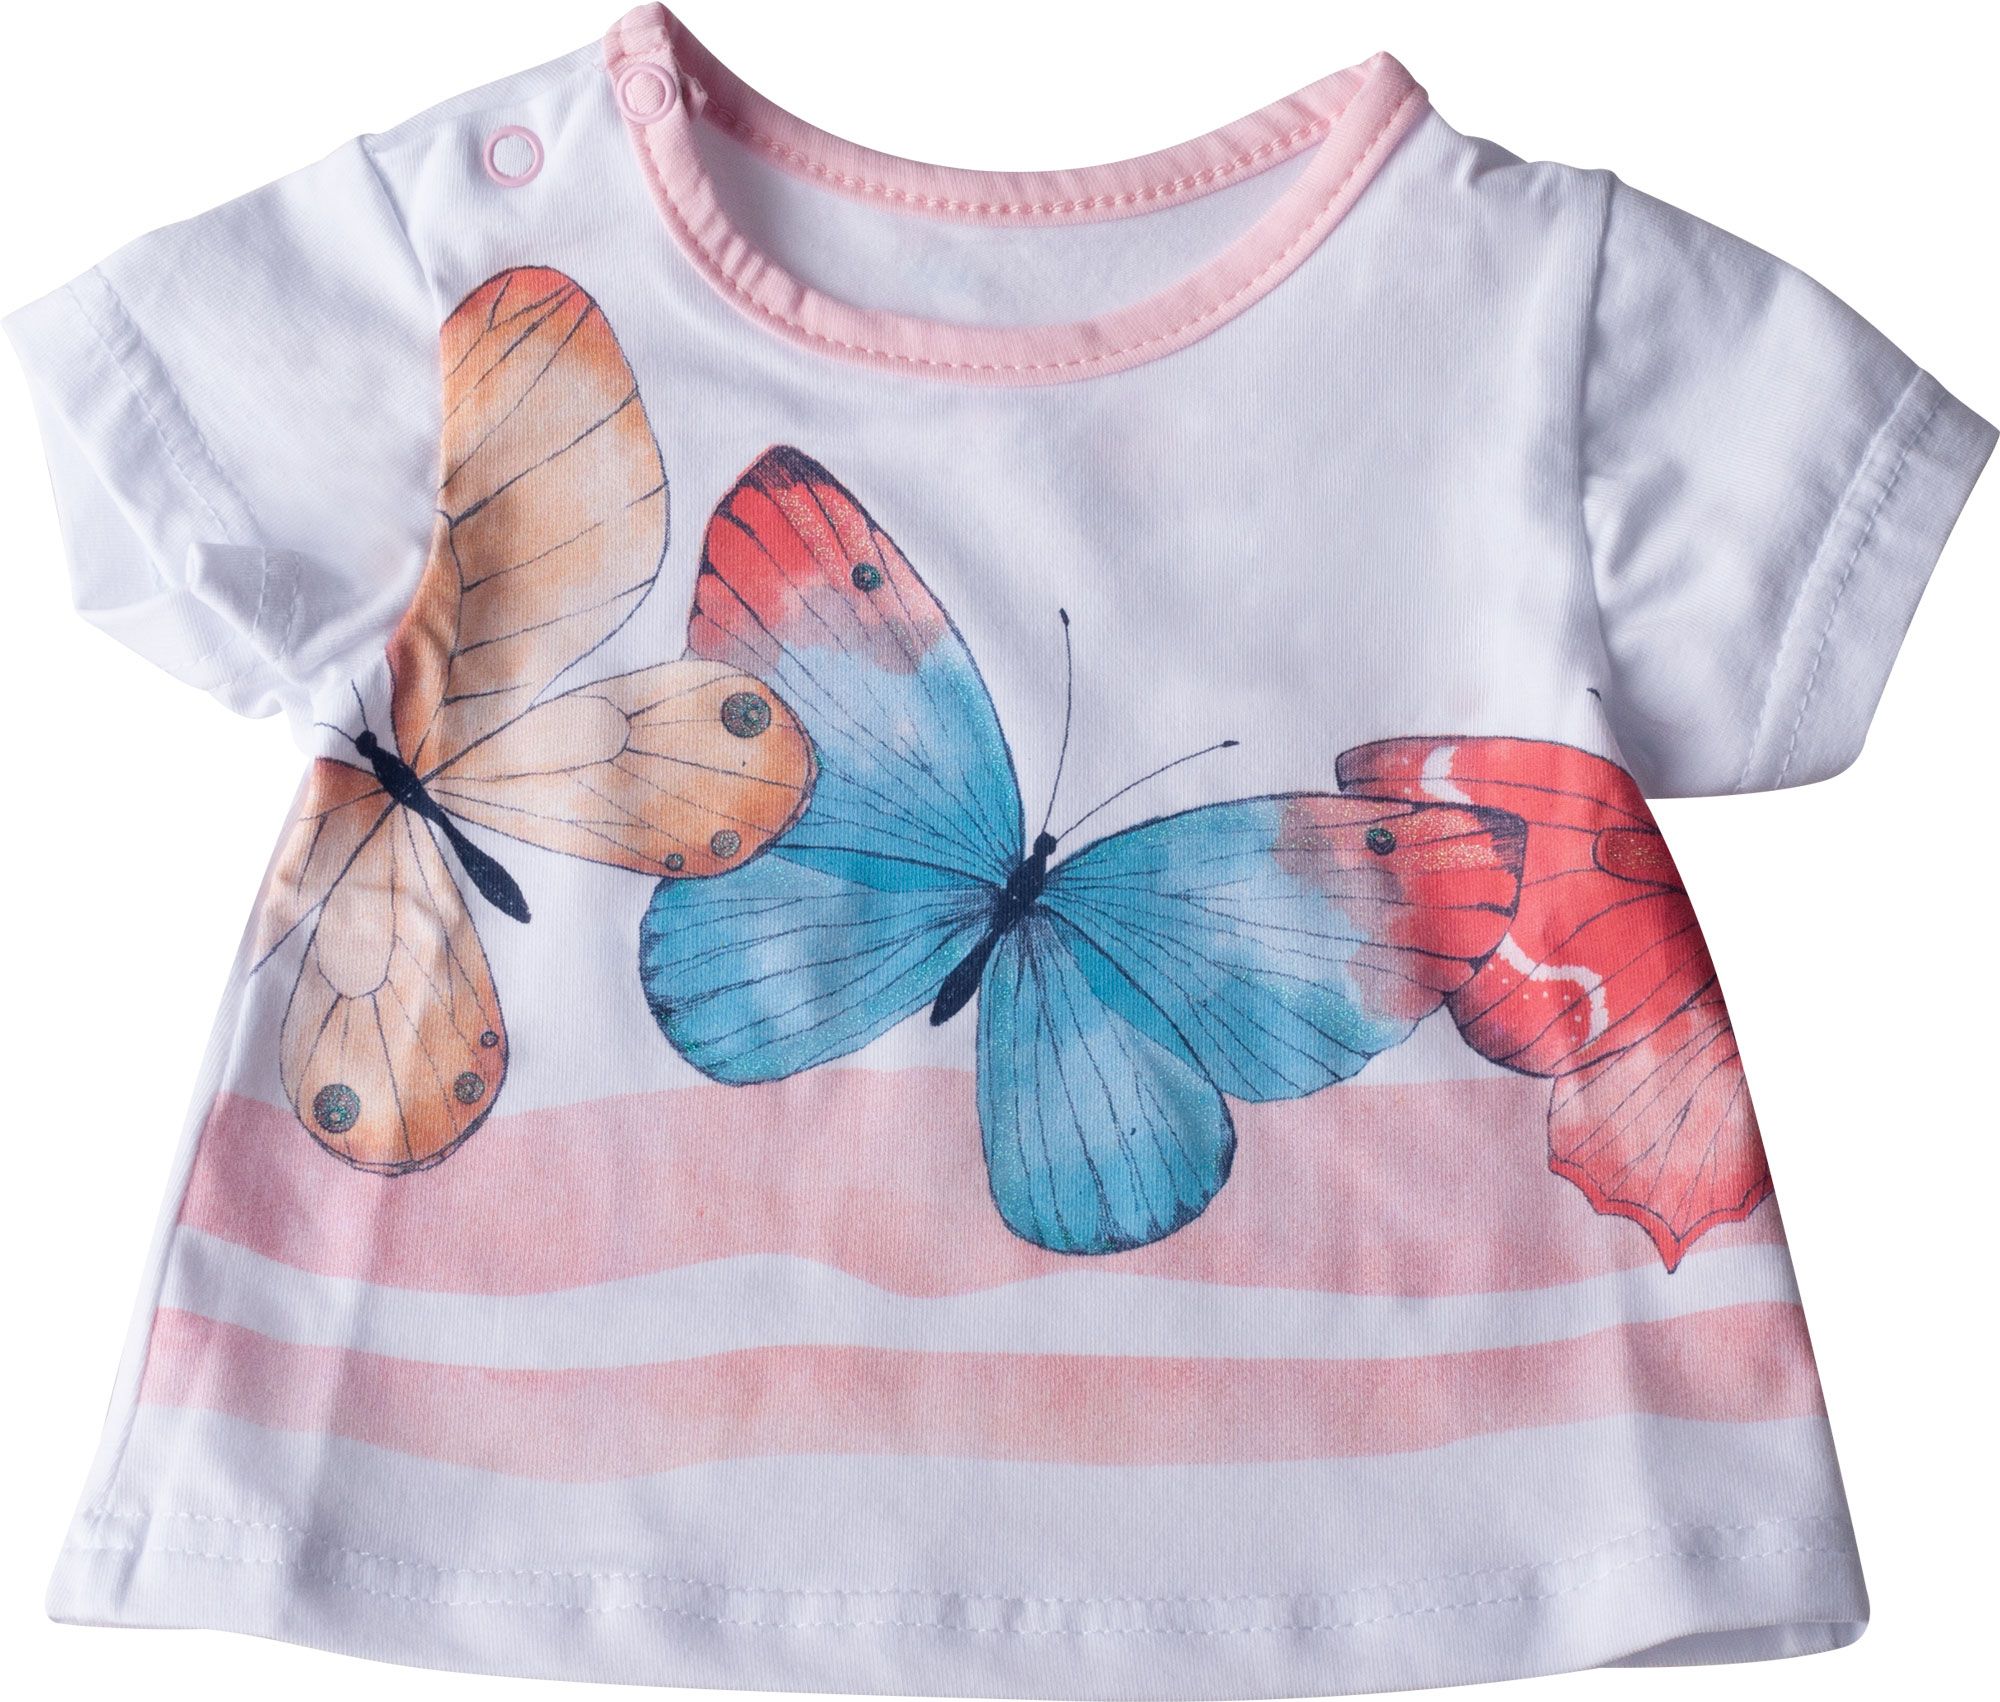 Блузка бабочка. Блузка с бабочками. Кофта с бабочками. Кофточка с бабочкой. Кофта с бабочками для девочки.